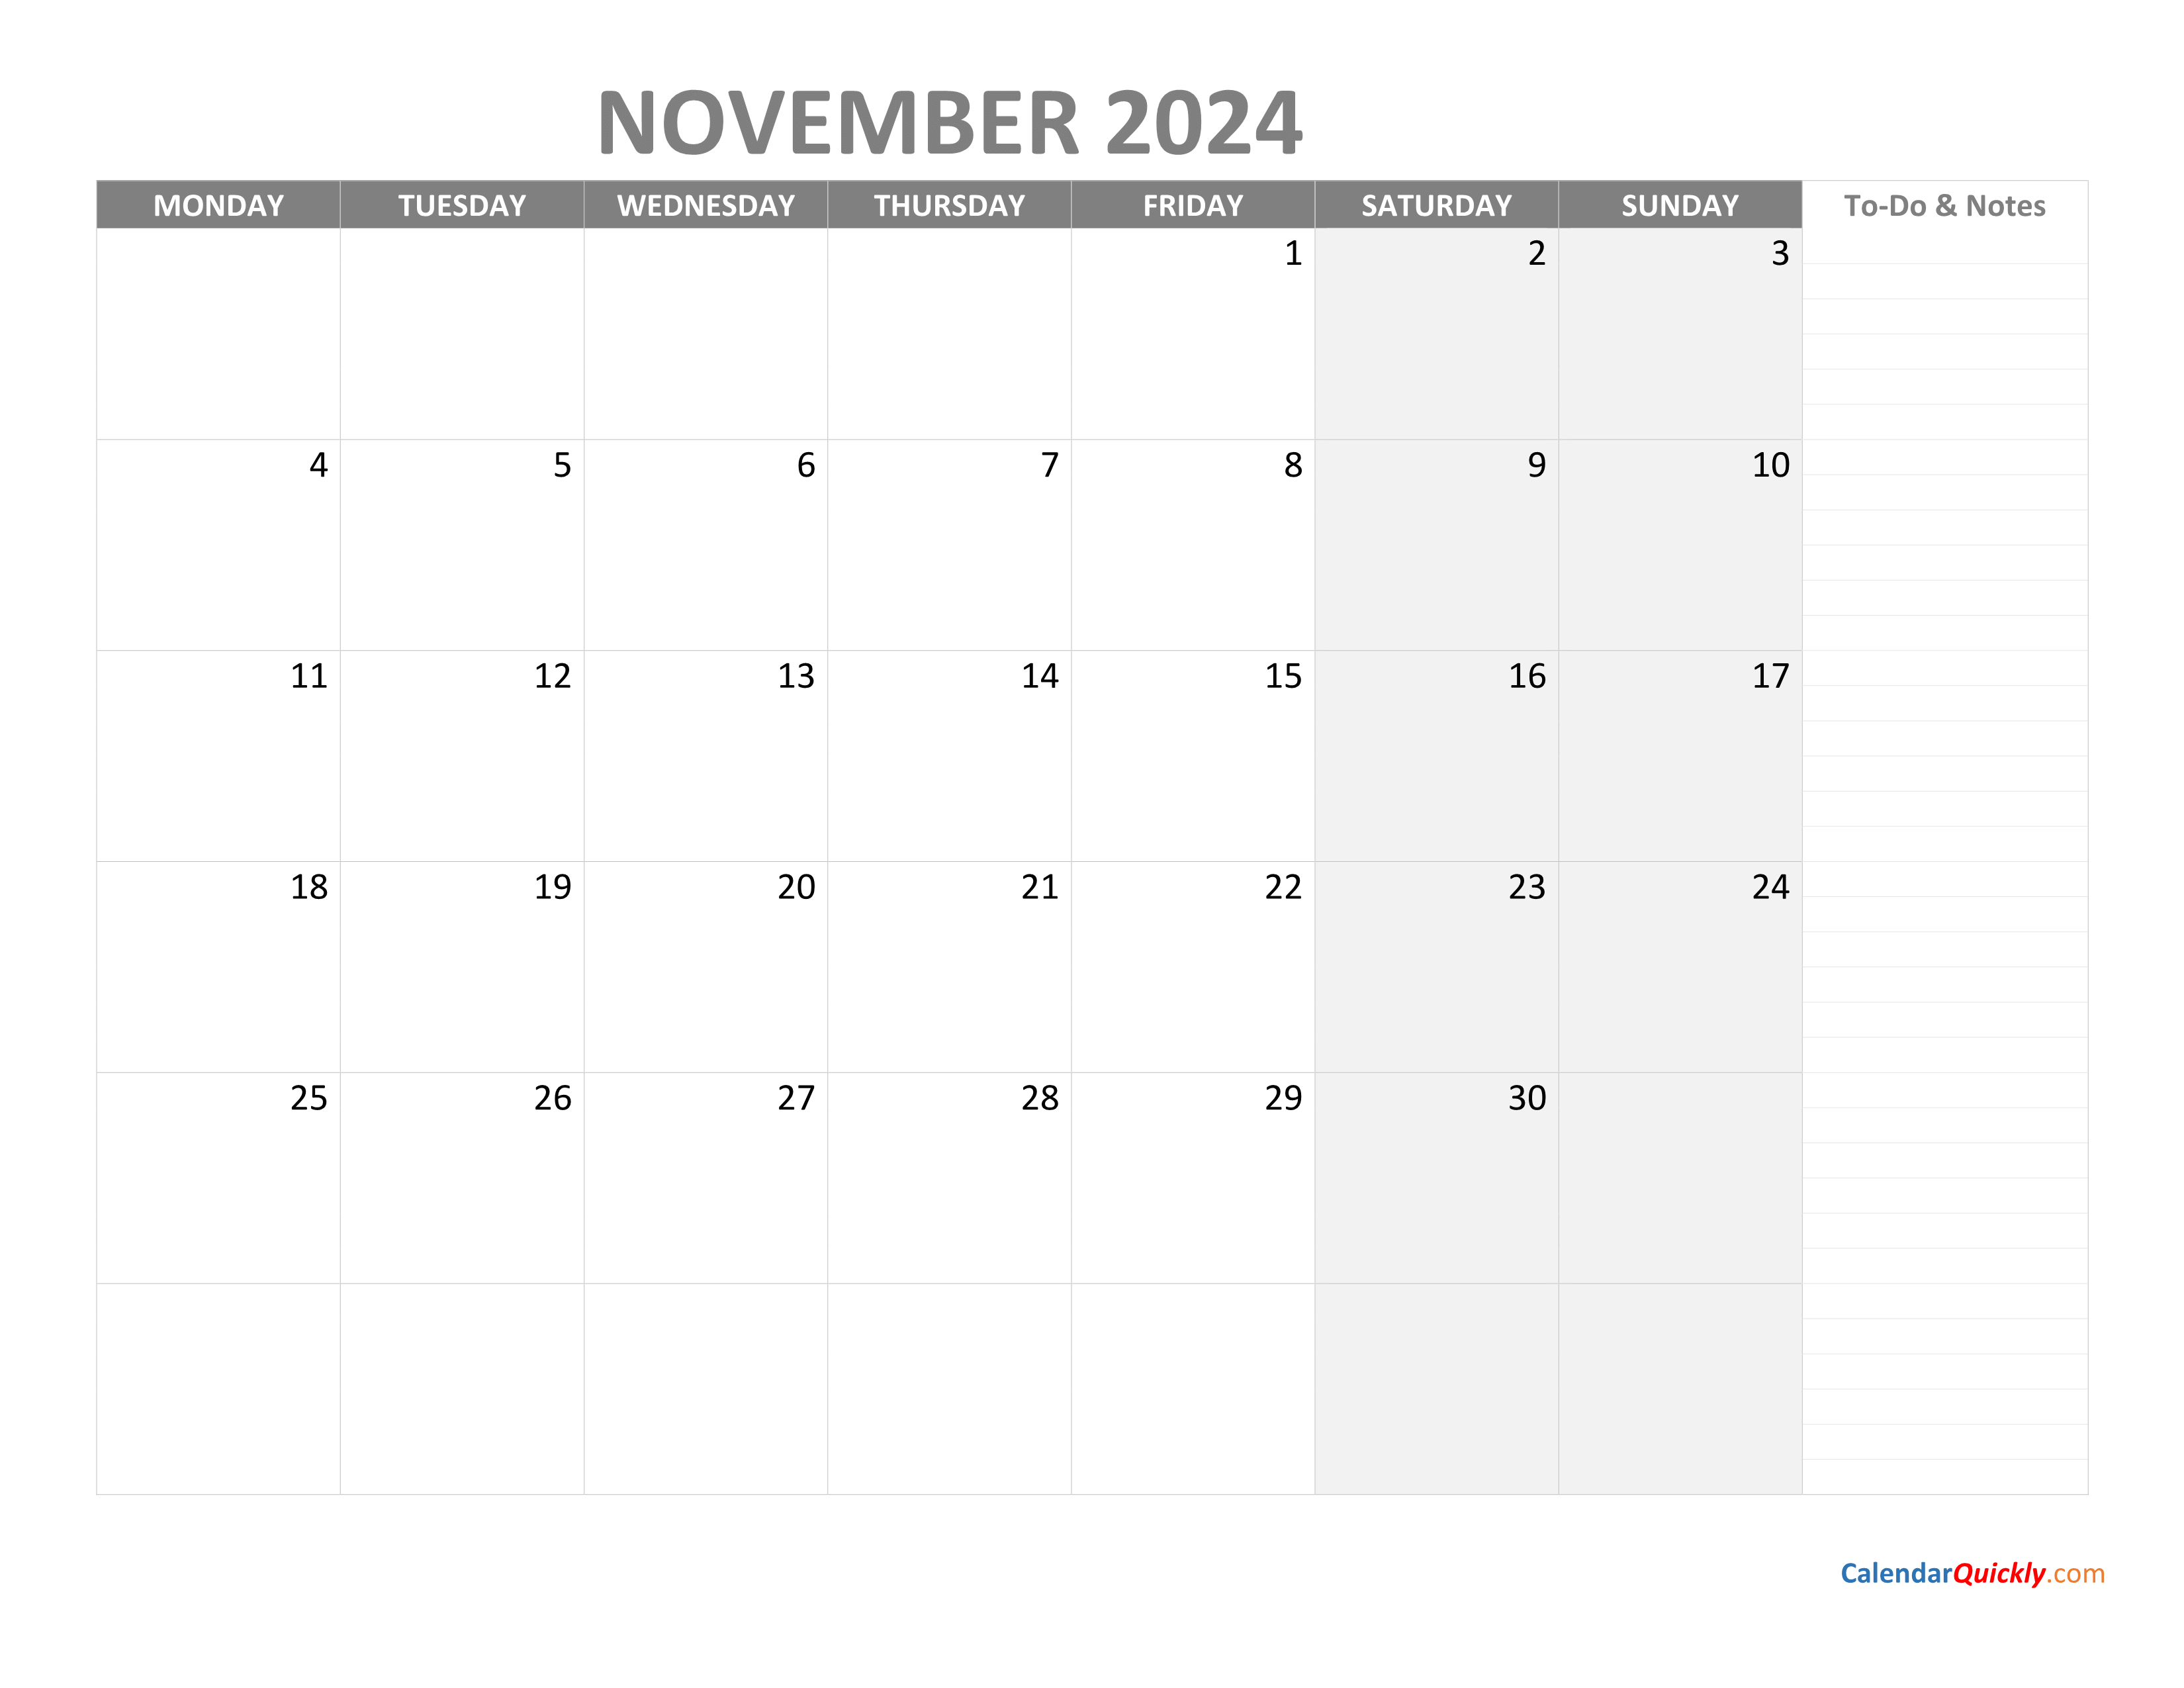 Yearly Calendar 2024 Calendar Quickly Gambaran